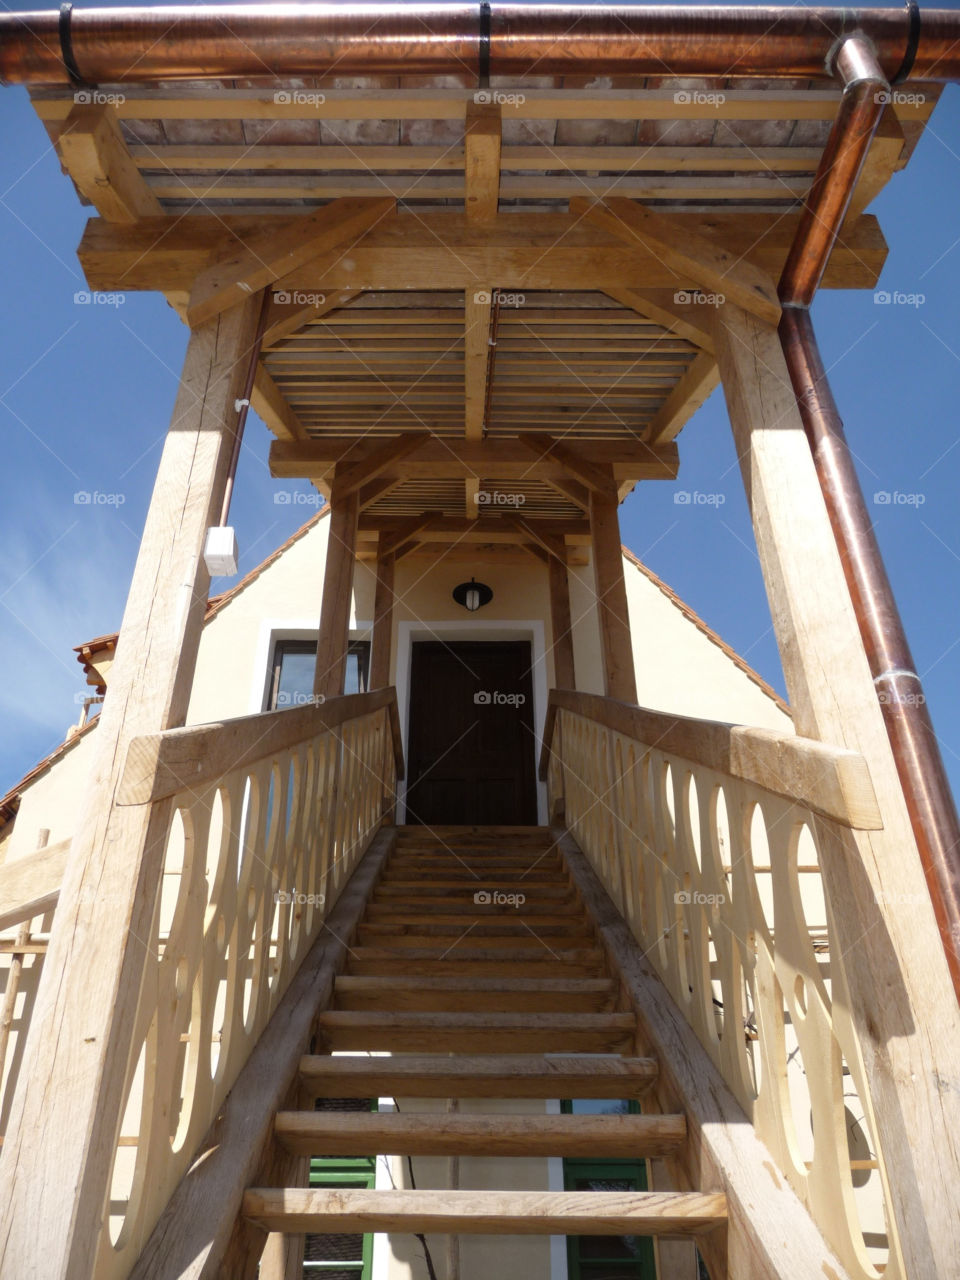 viscri romania stairway wooden by horia.irimie